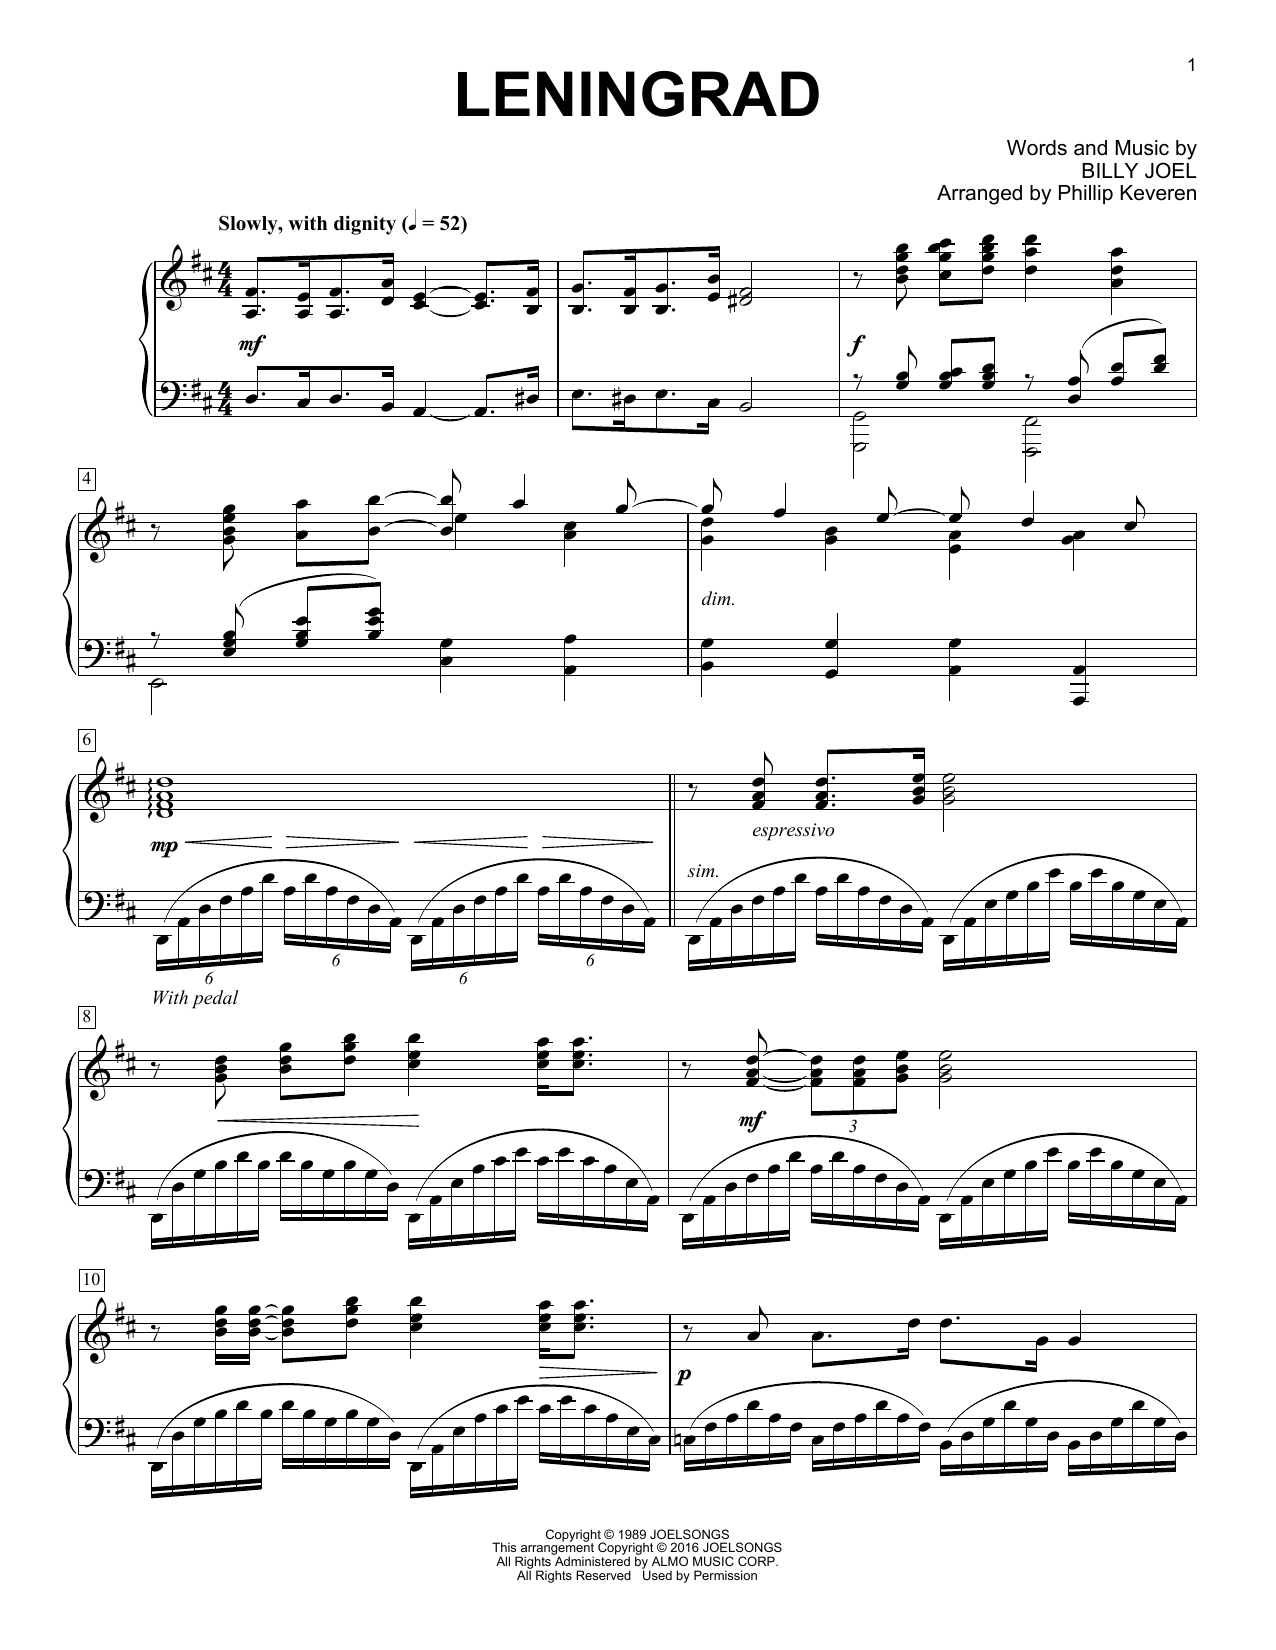 Billy Joel Leningrad [Classical version] (arr. Phillip Keveren) Sheet Music Notes & Chords for Piano - Download or Print PDF